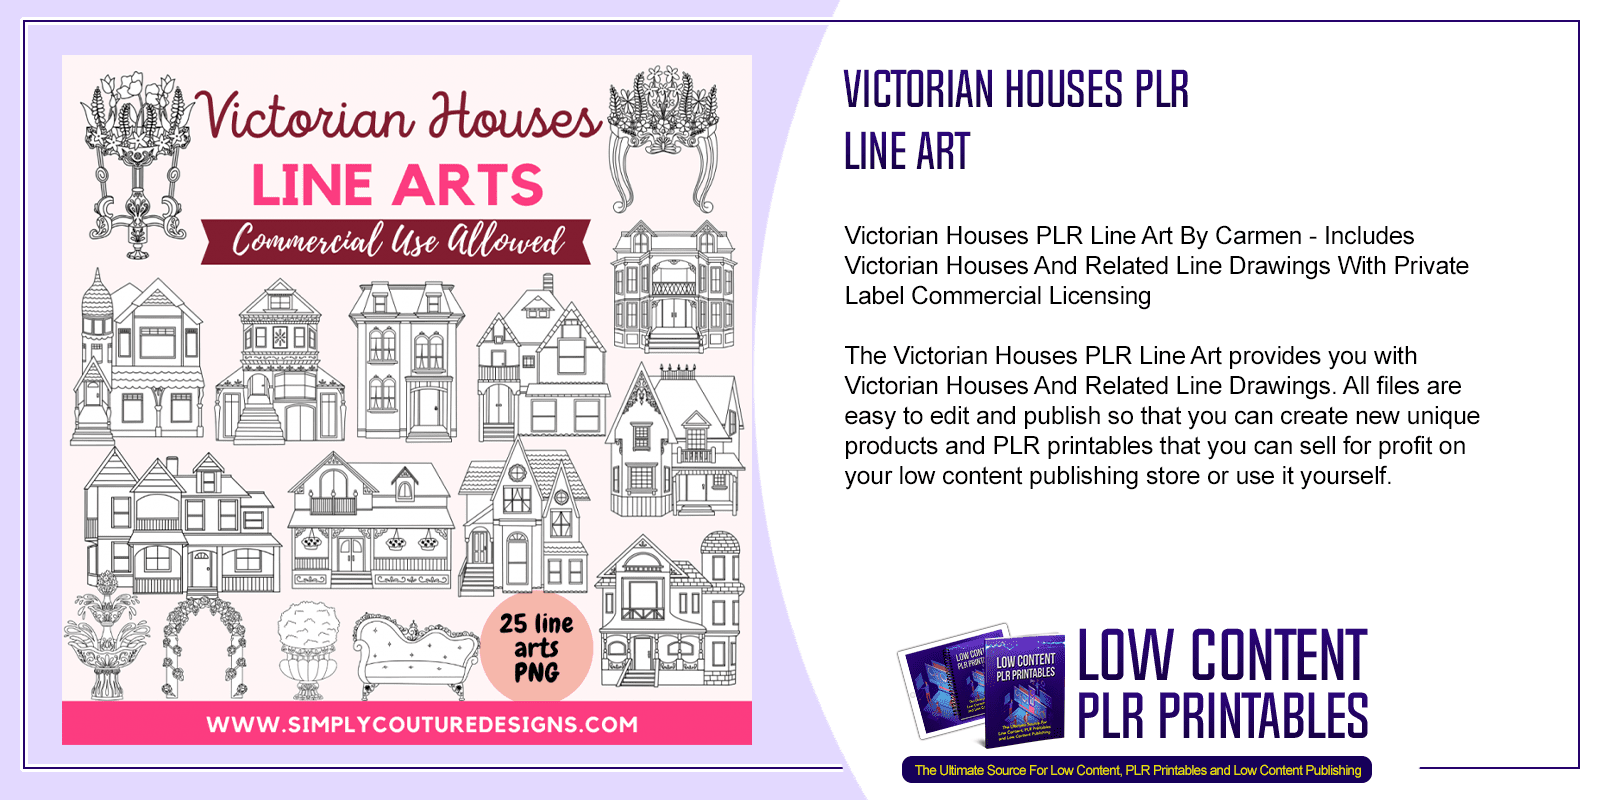 Victorian Houses PLR Line Art